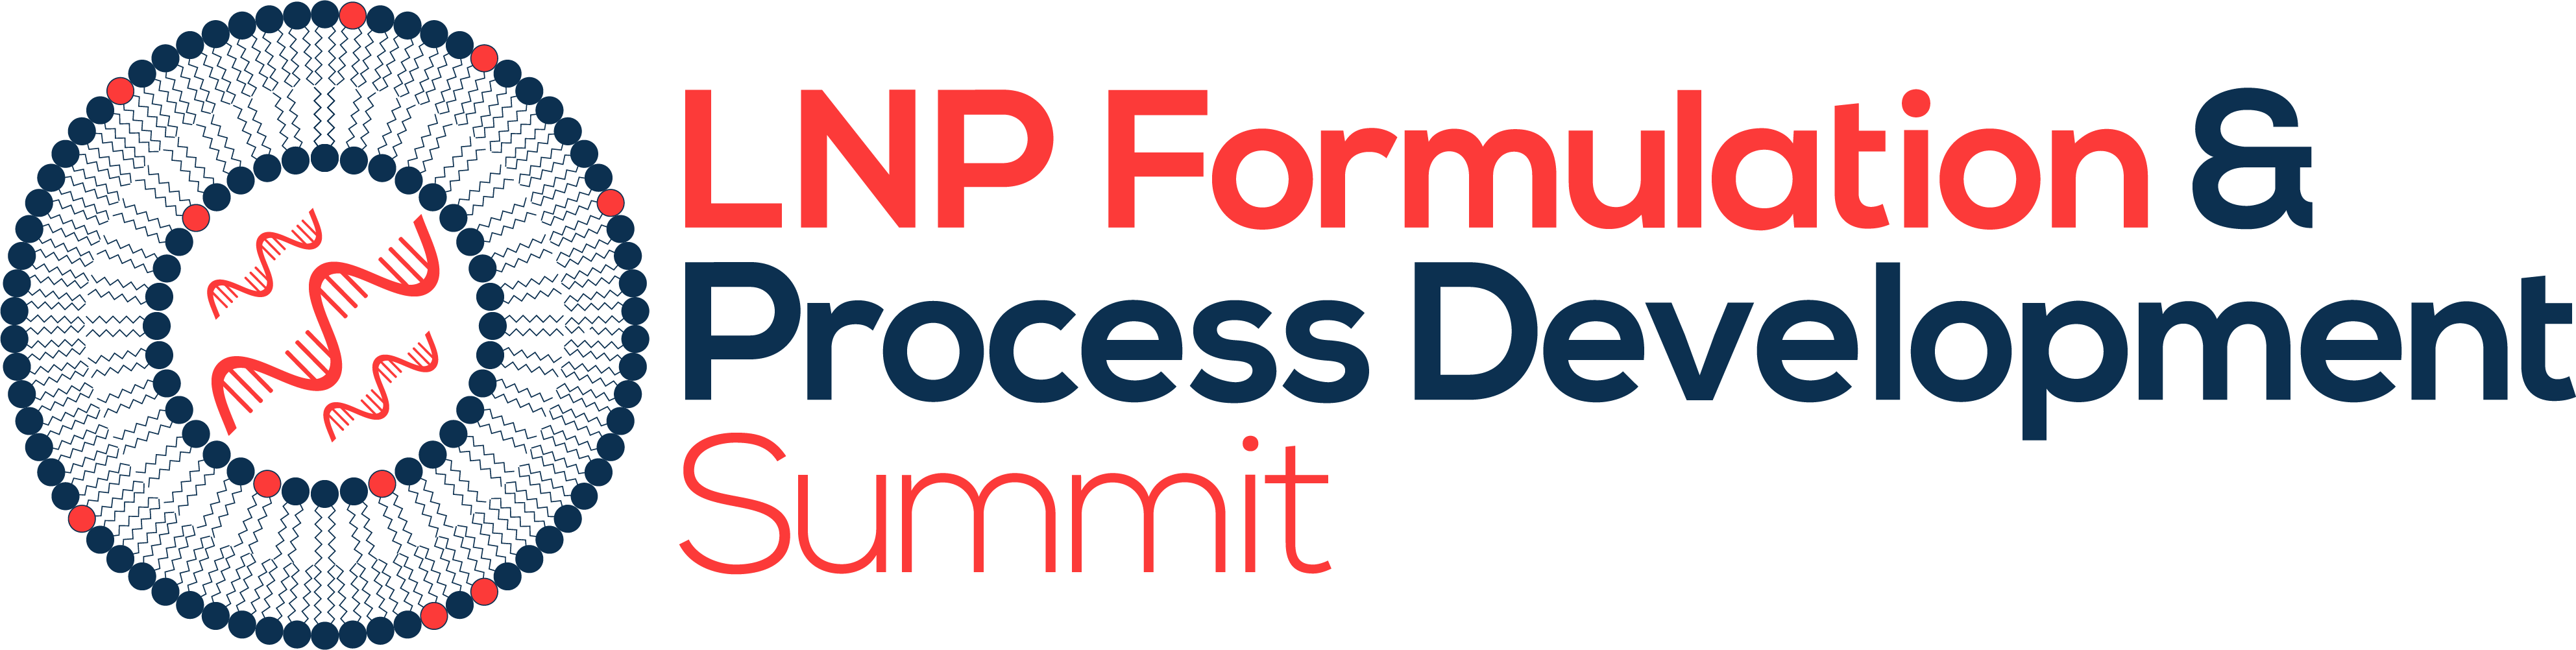 LNP Formulation & Process Development Summit 2022 April 1214